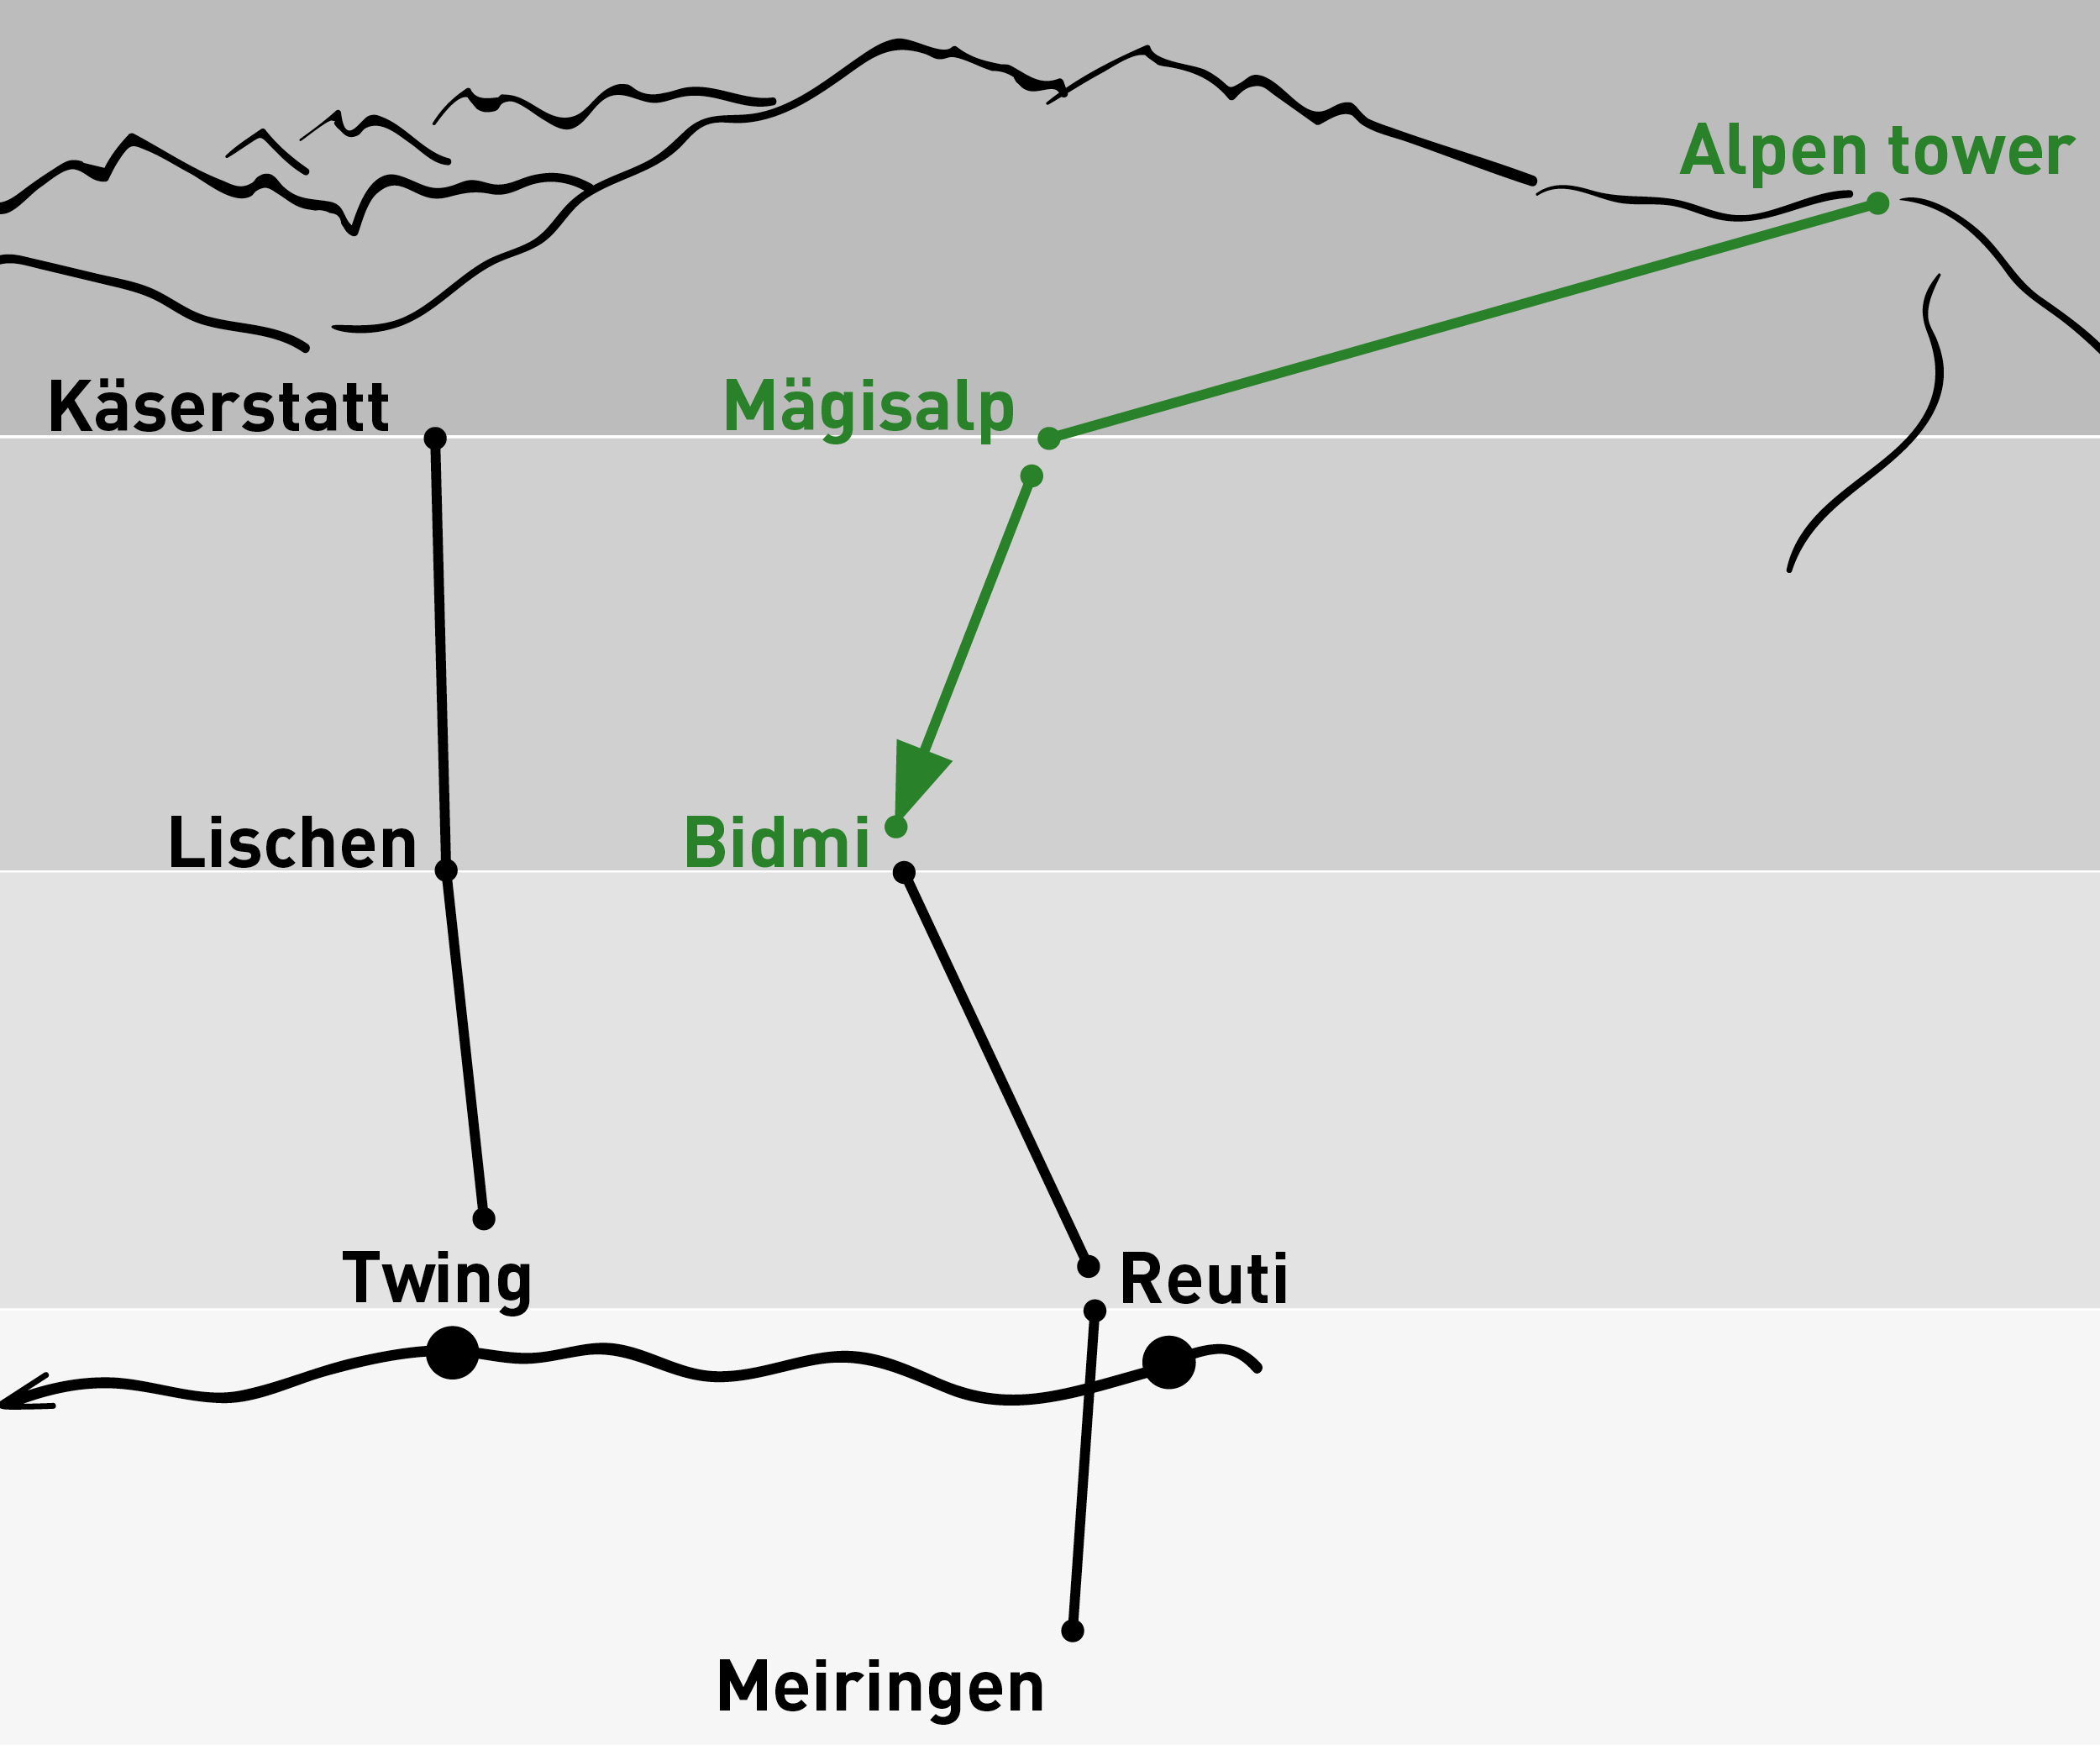 Alpen tower - Bidmi | Aller simple